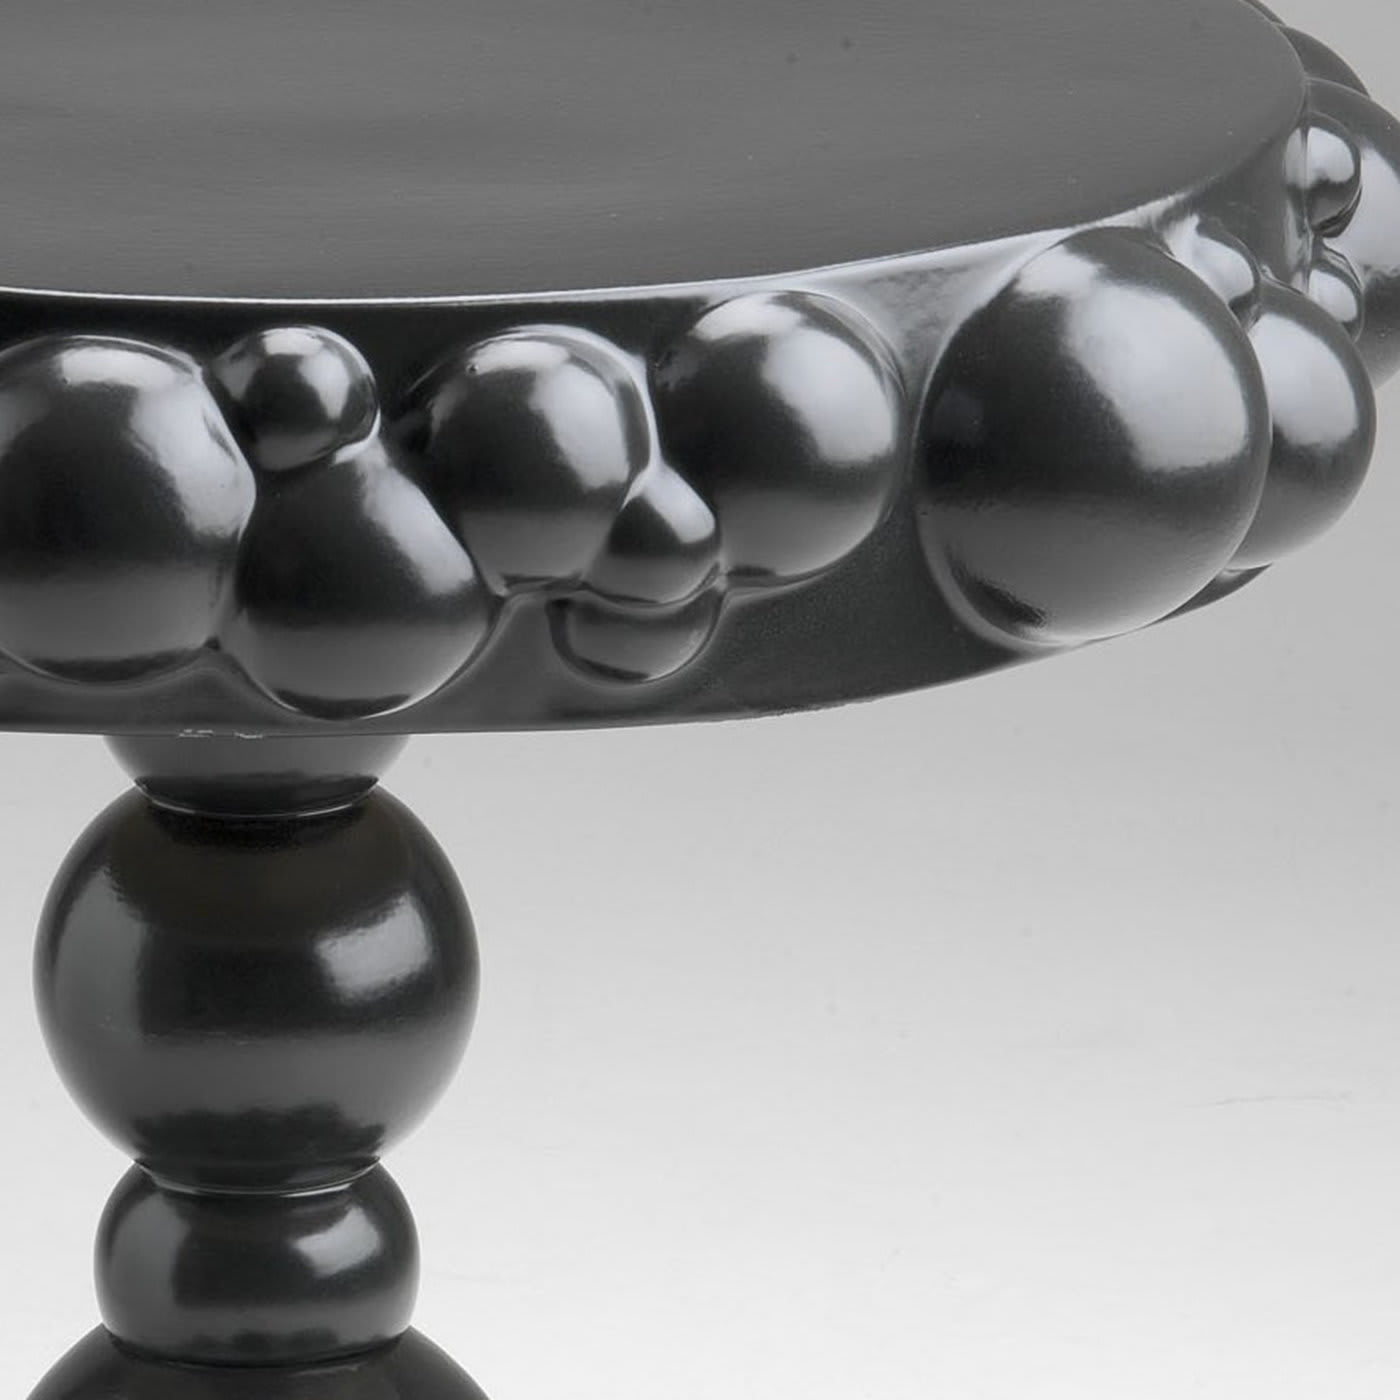 Venus Black Table by Antonio Cagianelli - Laboratorio Pesaro